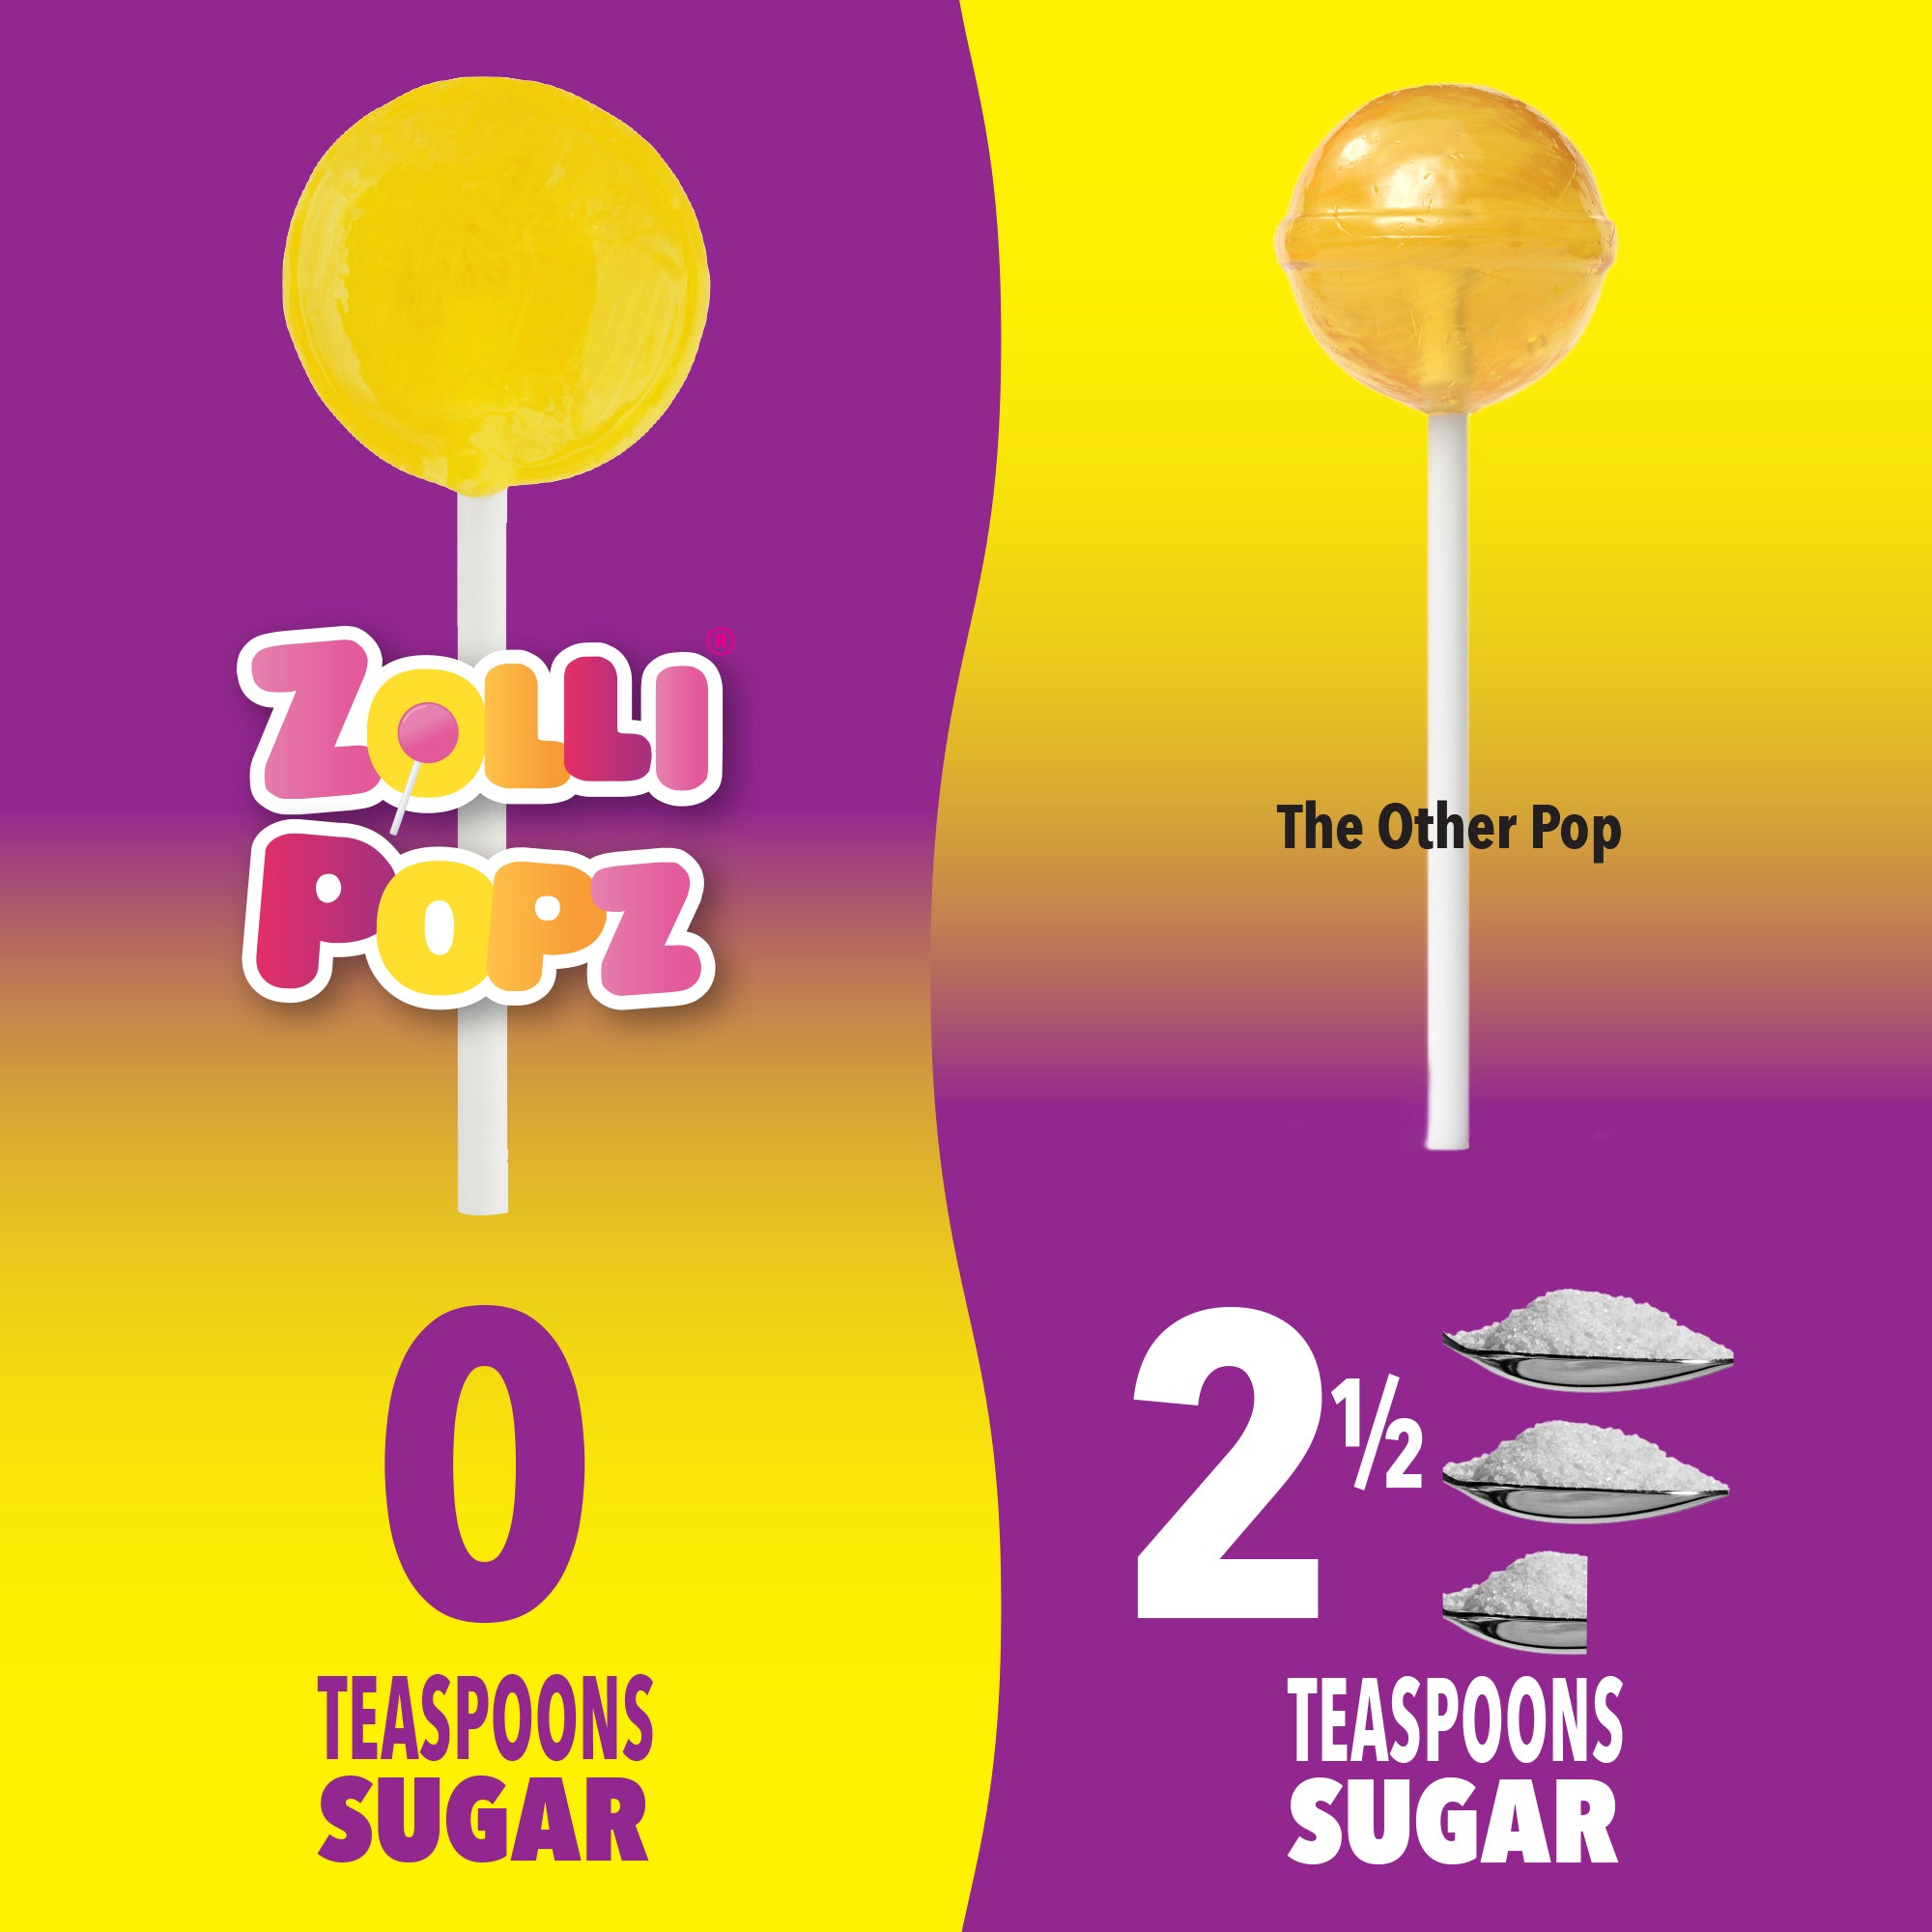 Zolli Zaffi Taffi have 0 teaspoons of sugar. Competing taffy have 4 teaspoons of sugar.